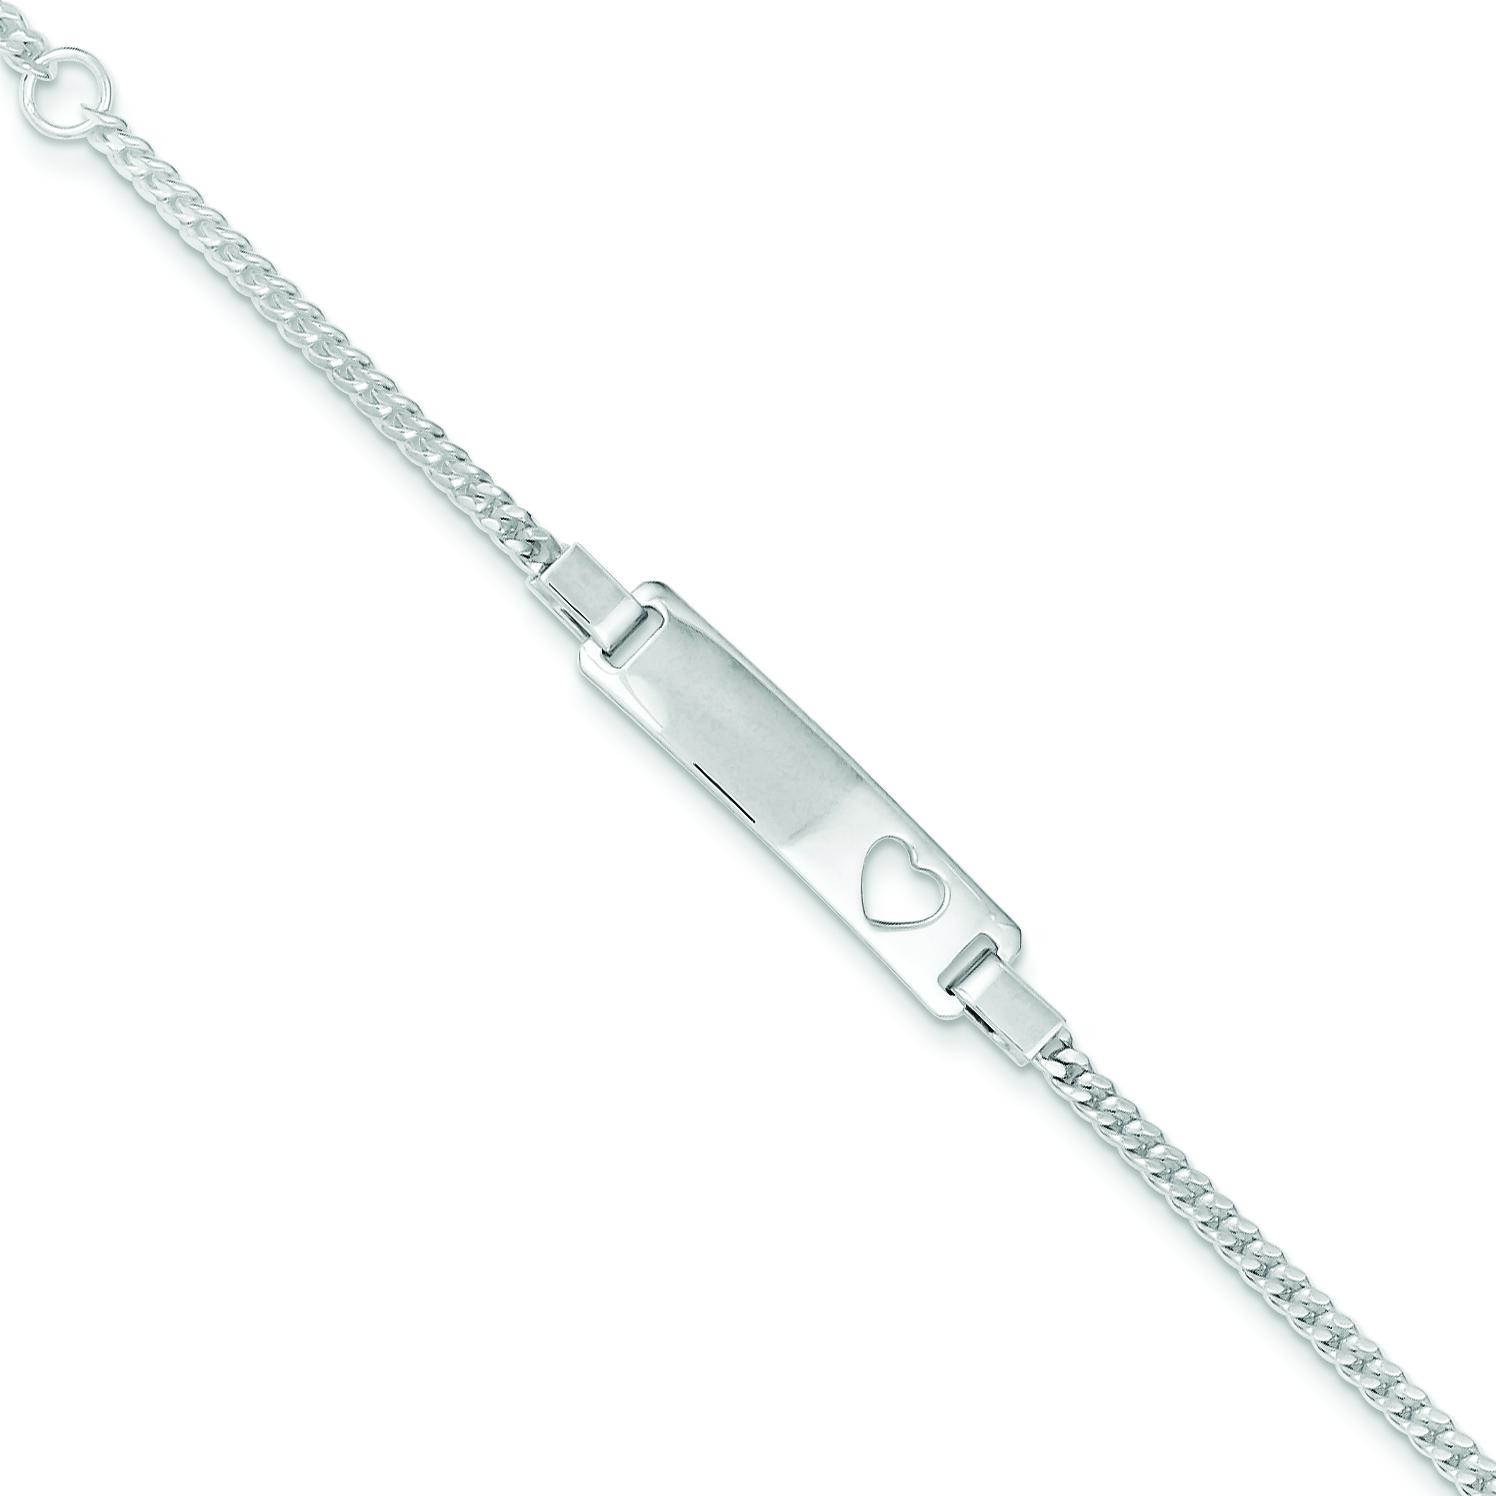 Adjustable Baby ID Bracelet in Sterling Silver